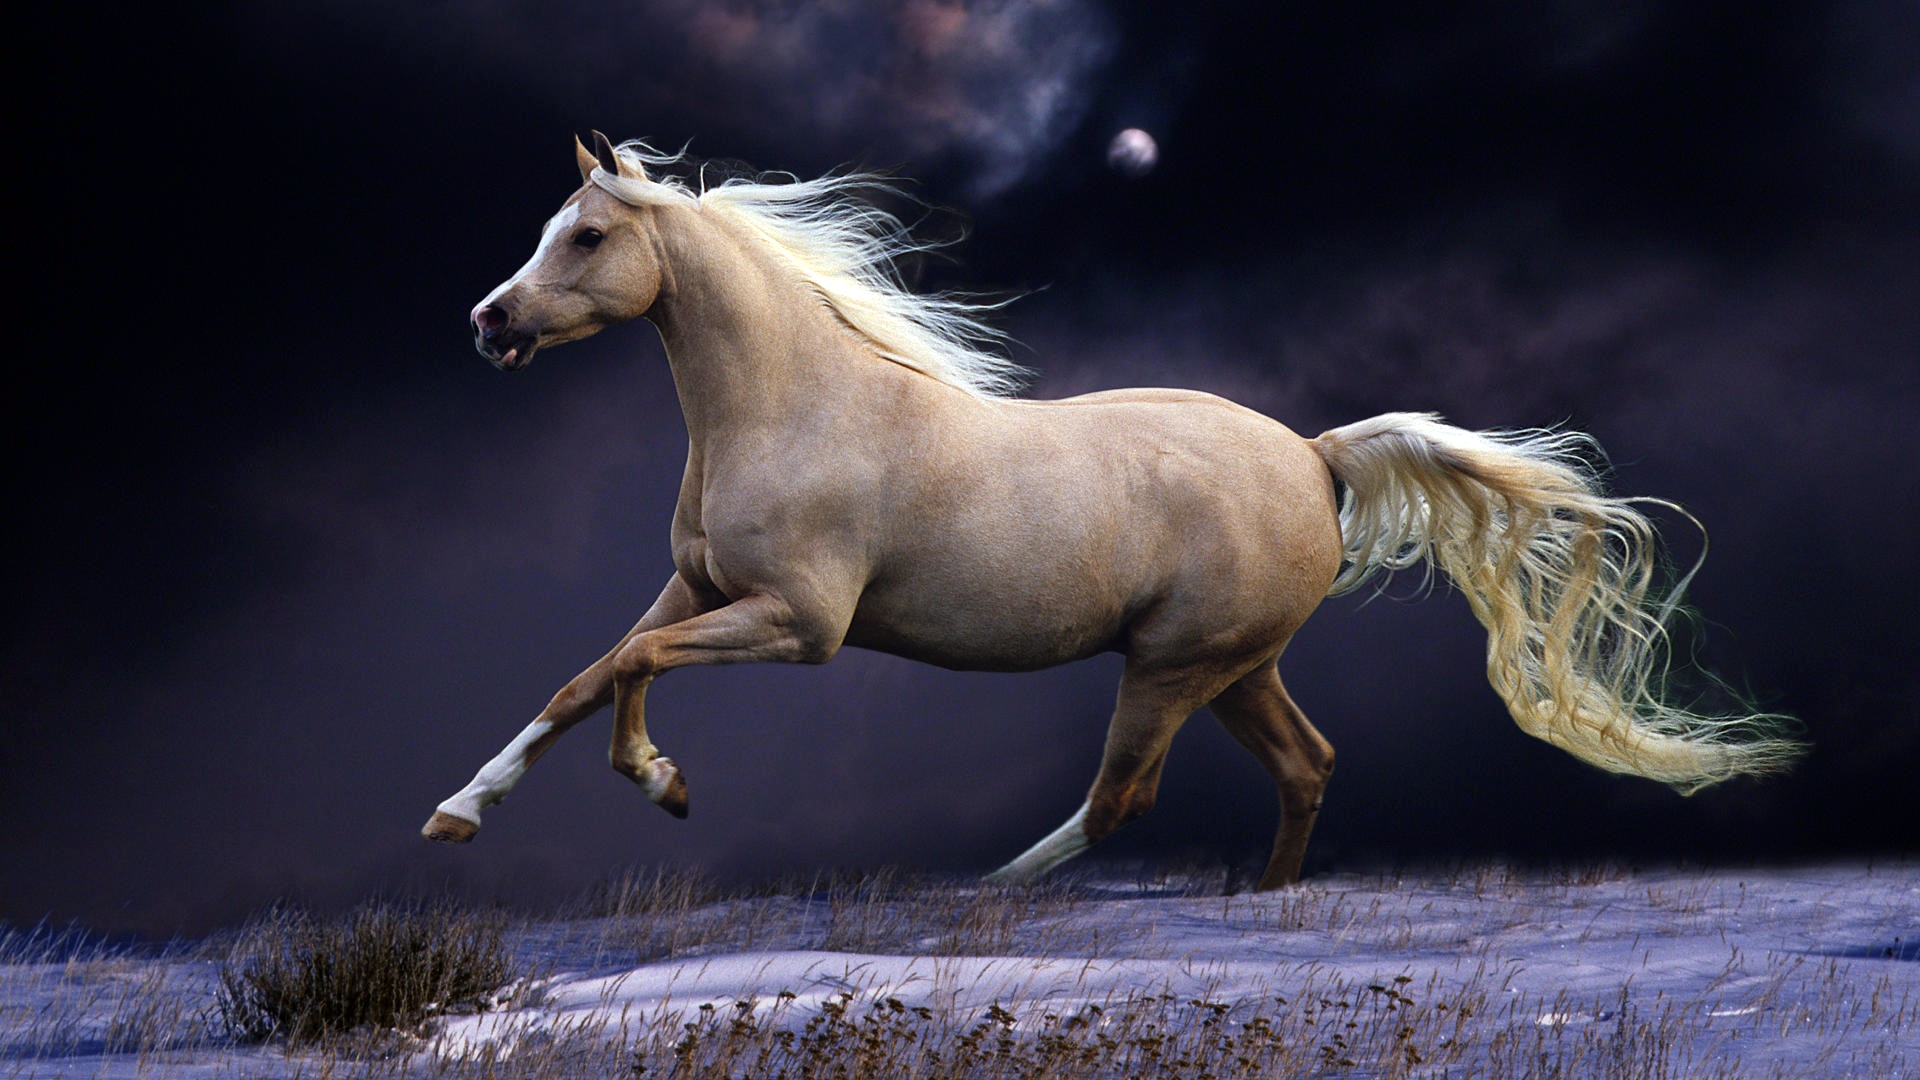 Beautiful-Horse-Running-Horses Photography